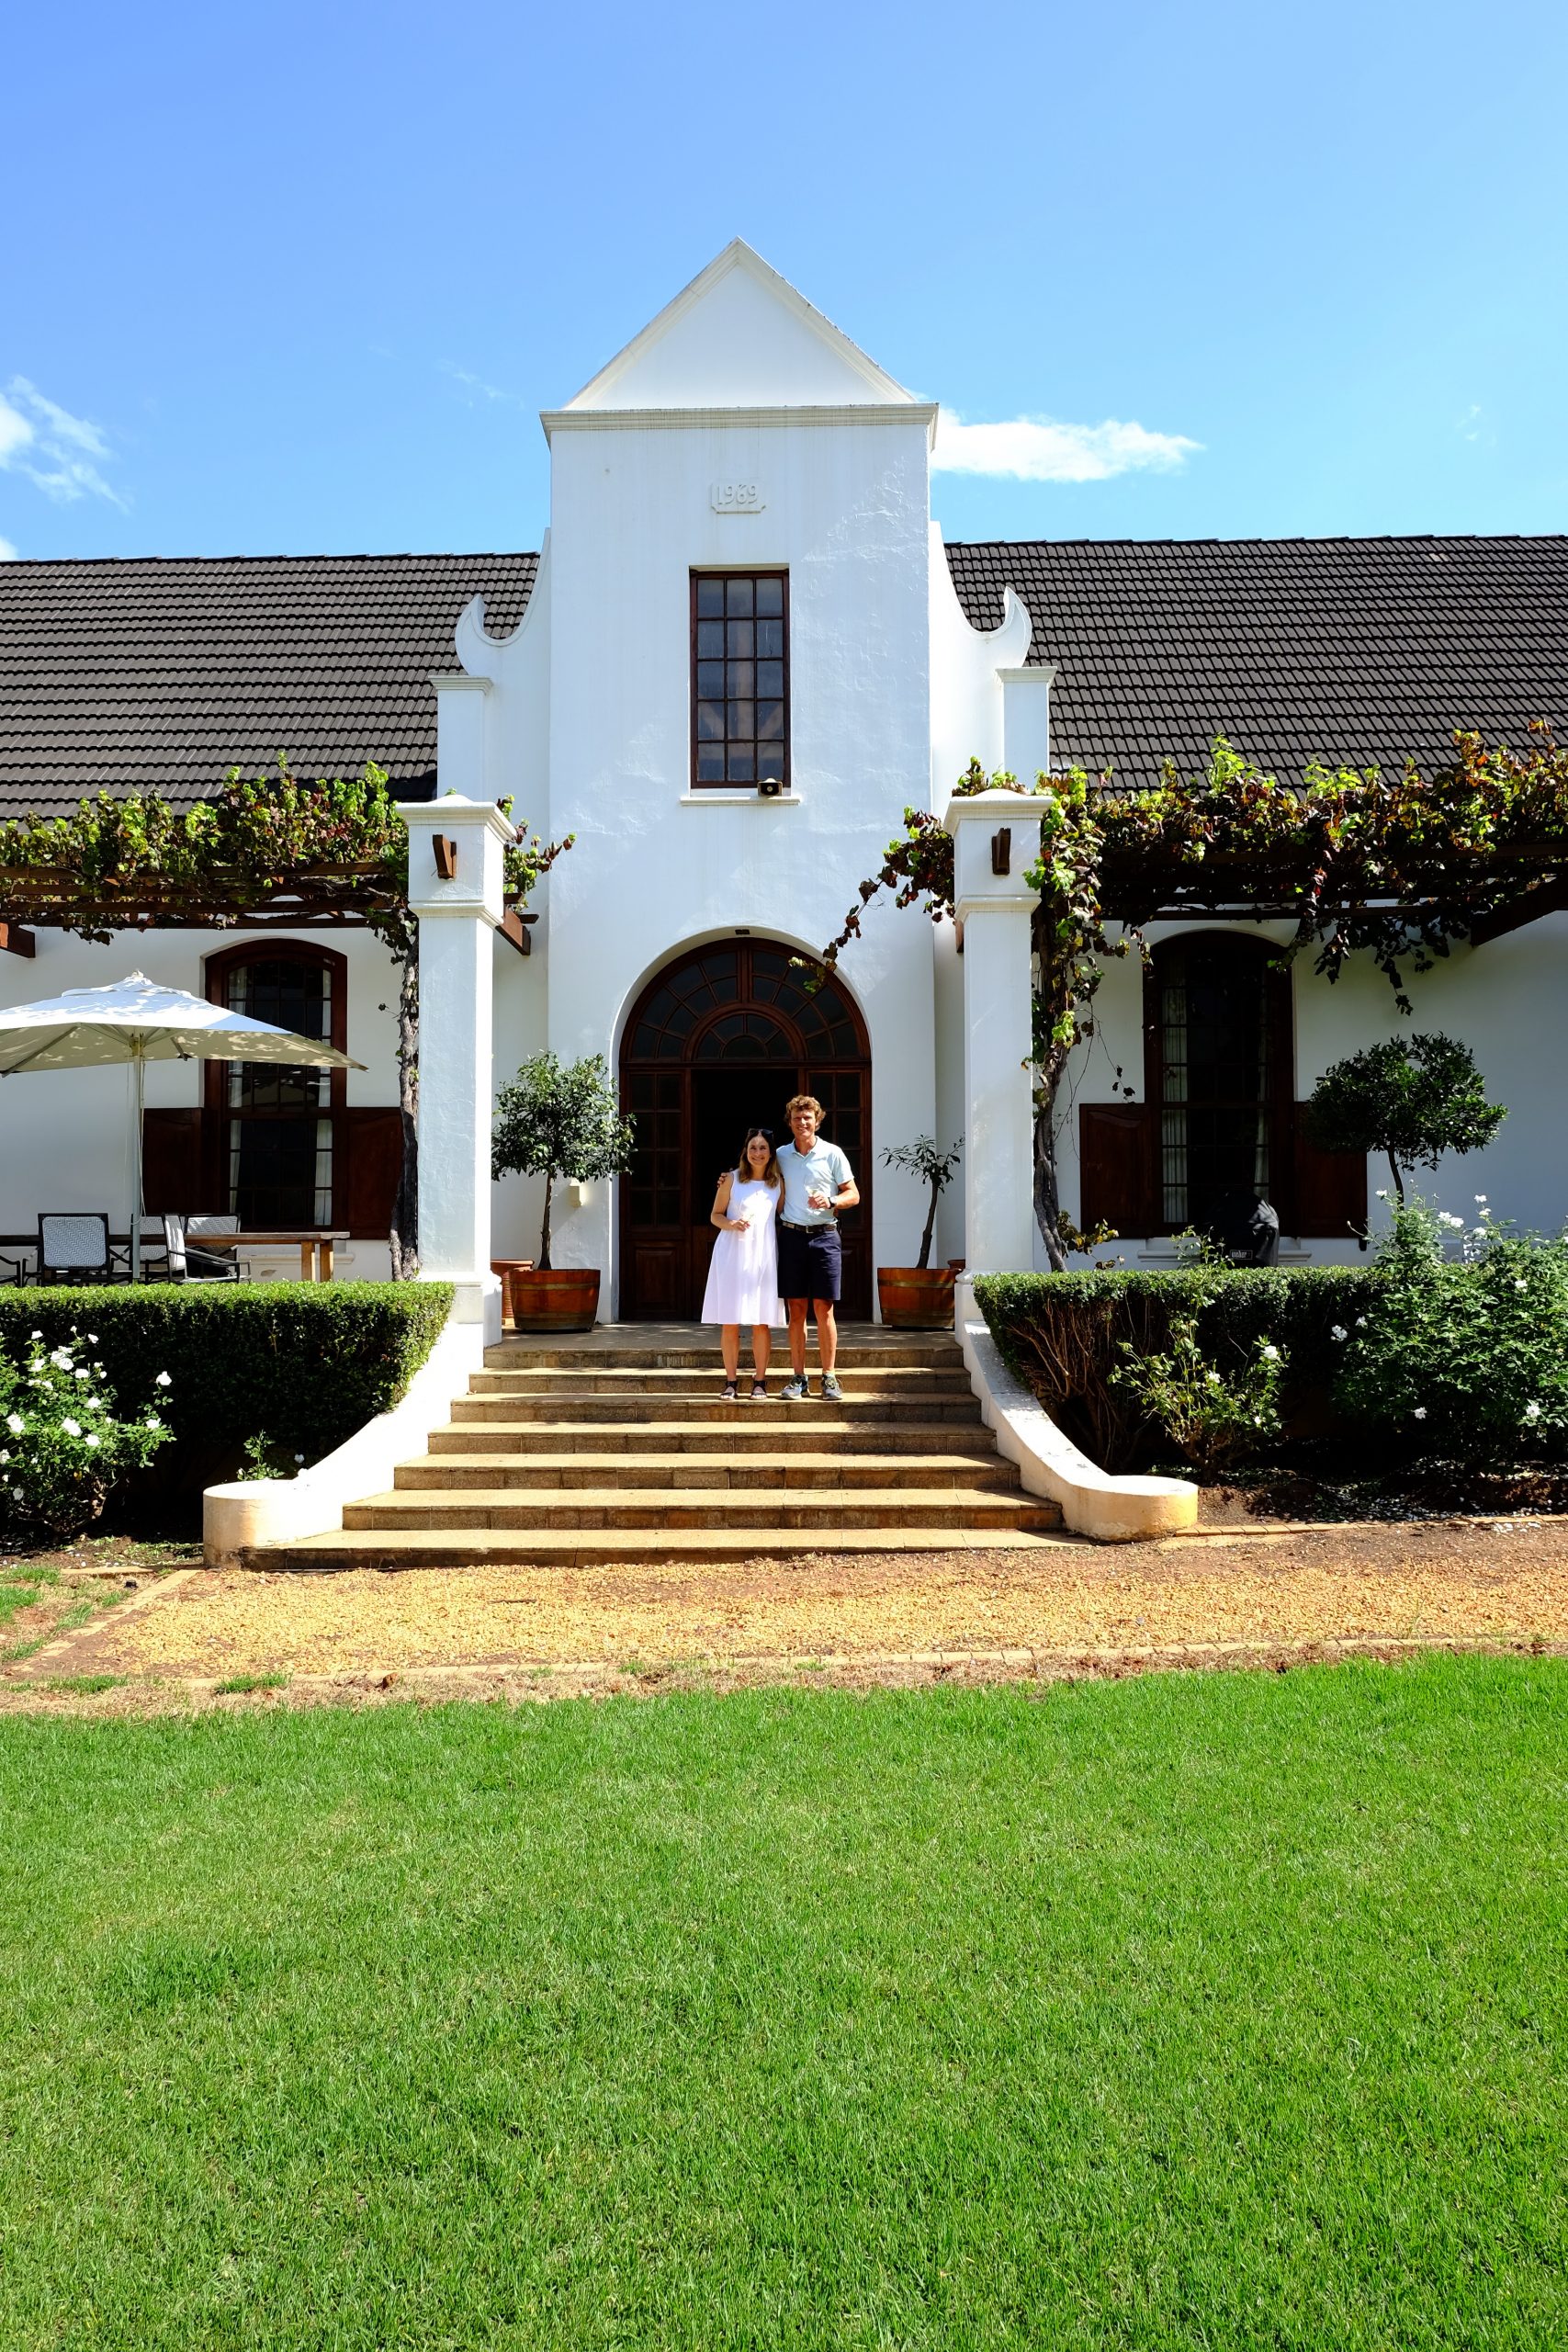 Mont Blois Wine Estate uit Zuid Afrika - Ernst en Nina-Mari Bruwer